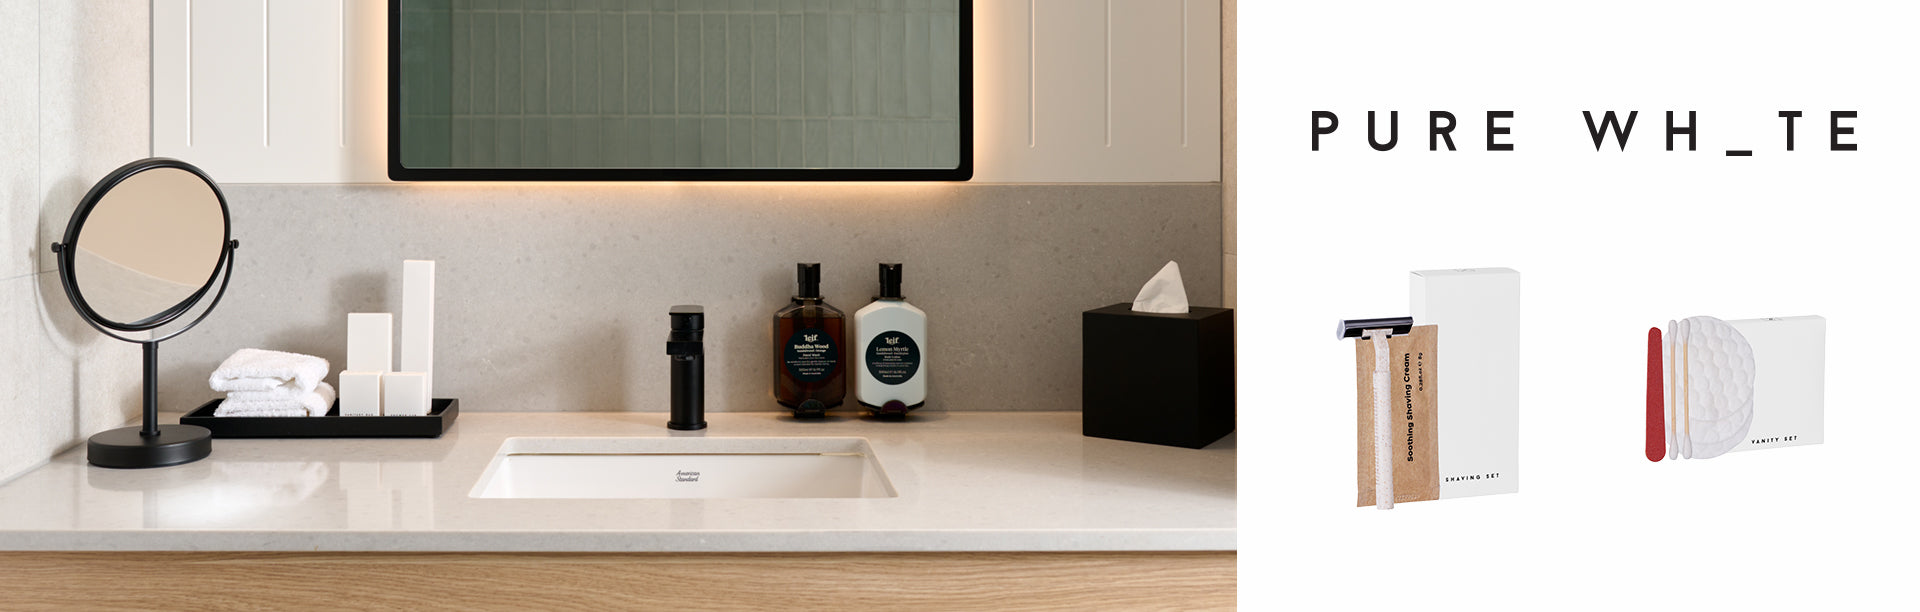 Swisstrade Hotel Bathroom Biodegradable Pure White Accessories